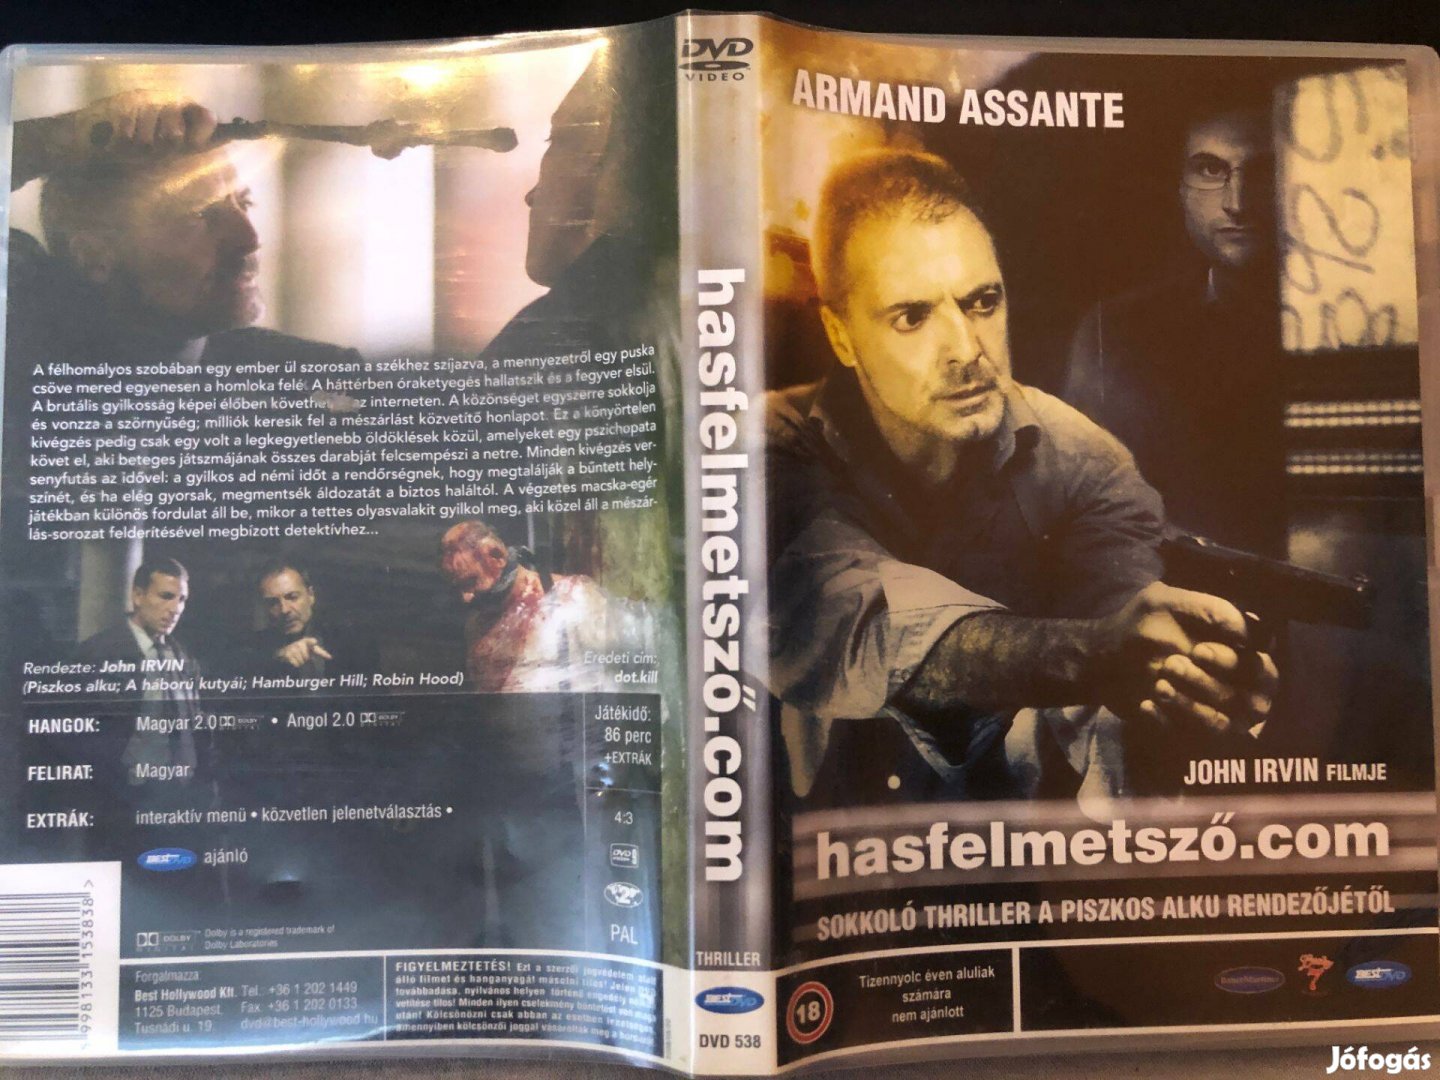 Hasfelmetsző.com (karcmentes, Armand Assante) DVD